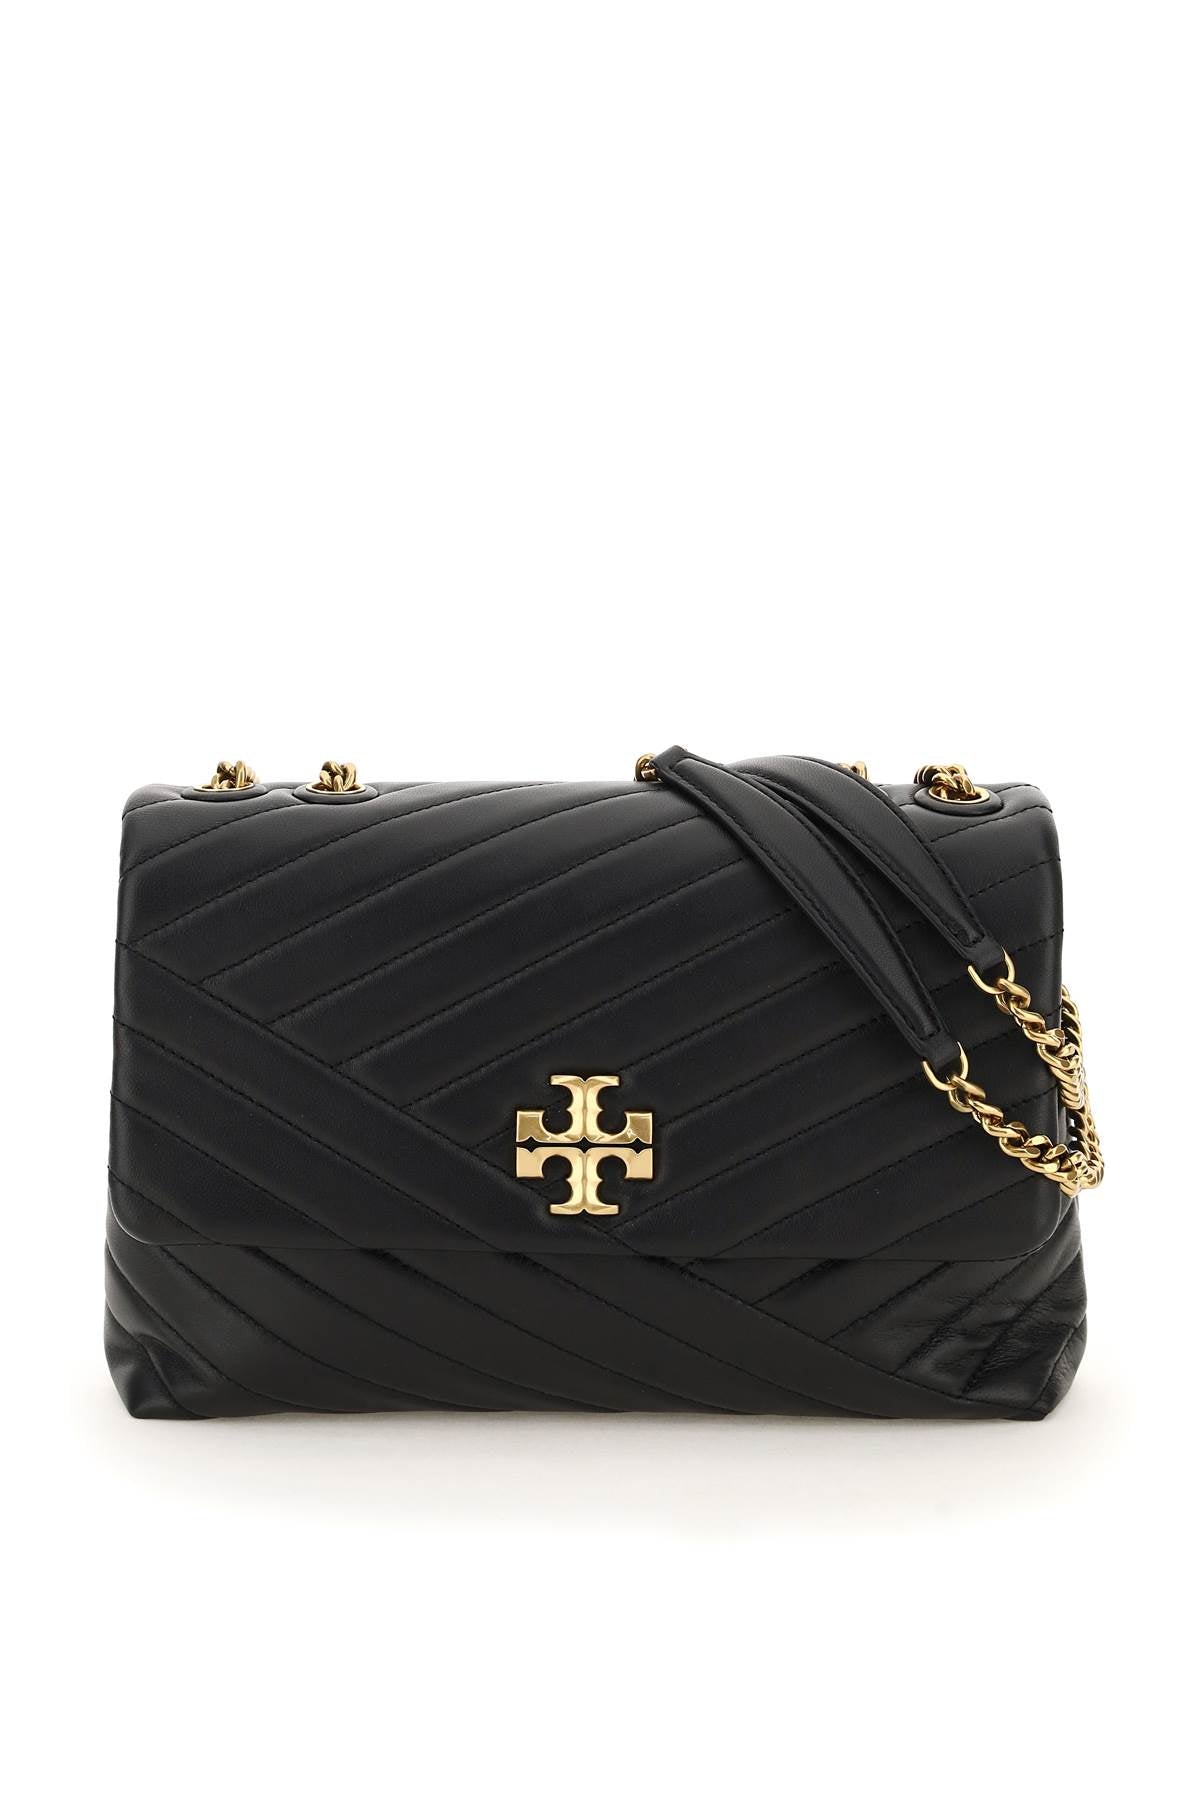 TORY BURCH Black Chevron Matelassé Handbag for Women with Gold Monogram